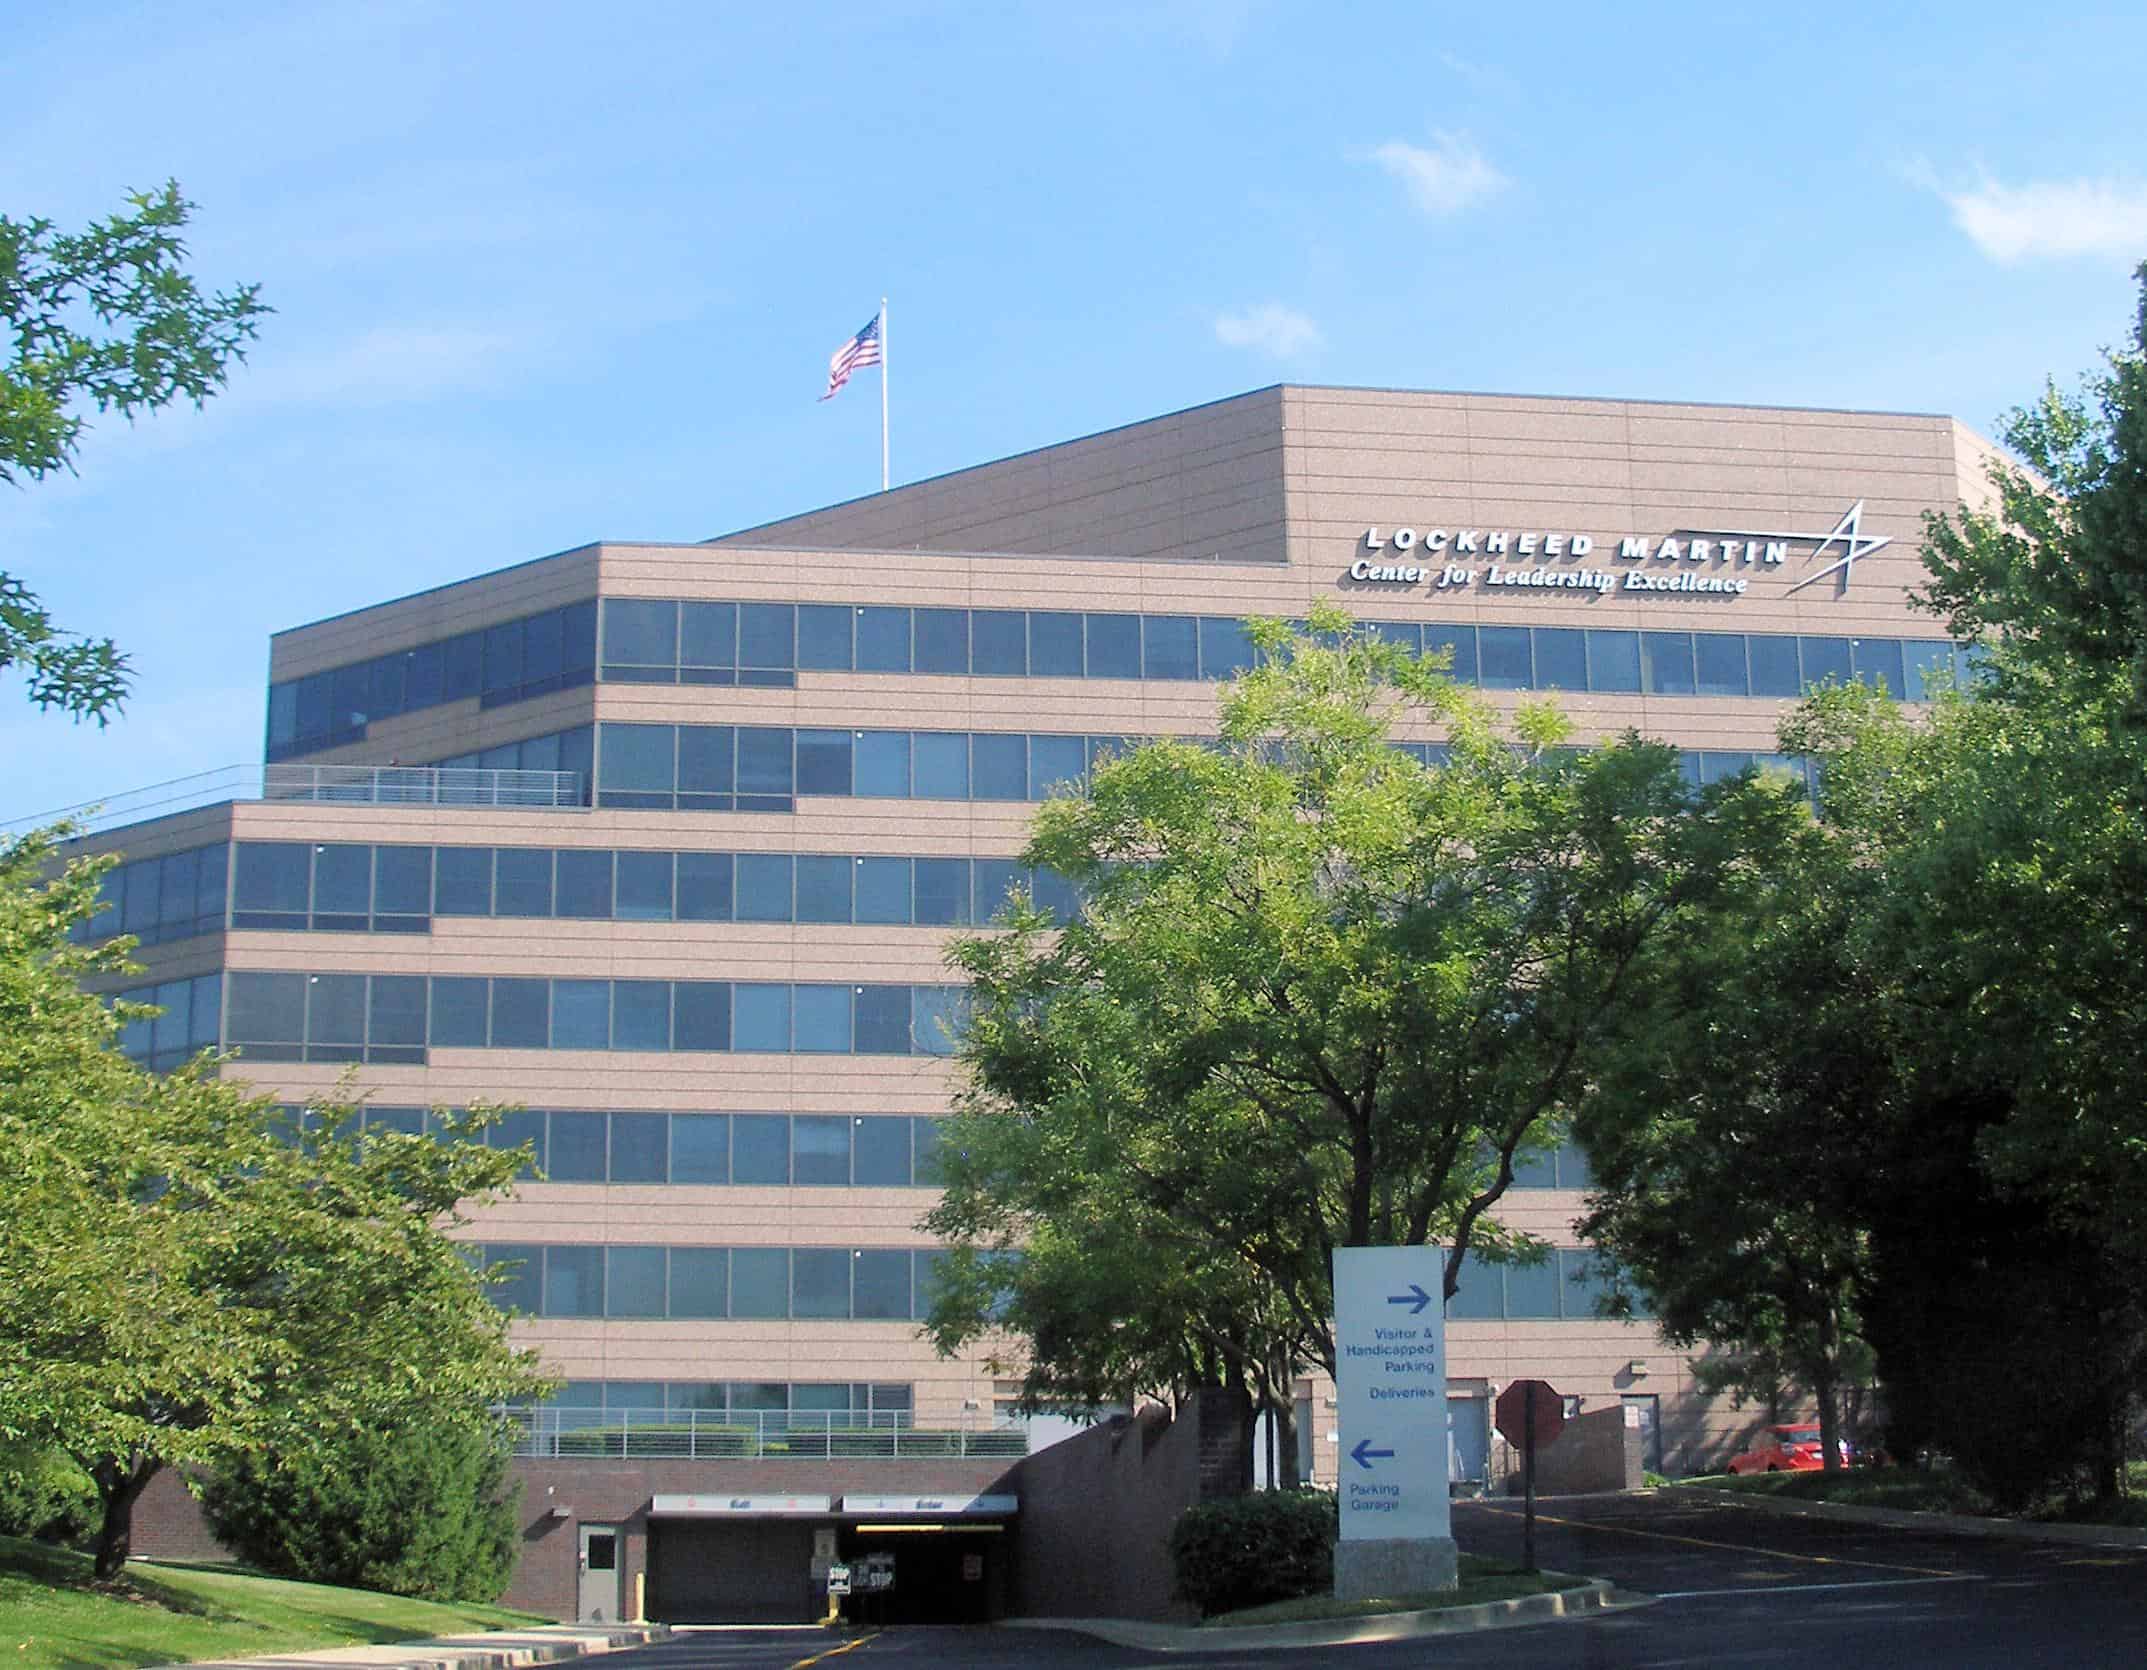 Lockheed Martin headquarters by Coolcaesar at en.wikipedia